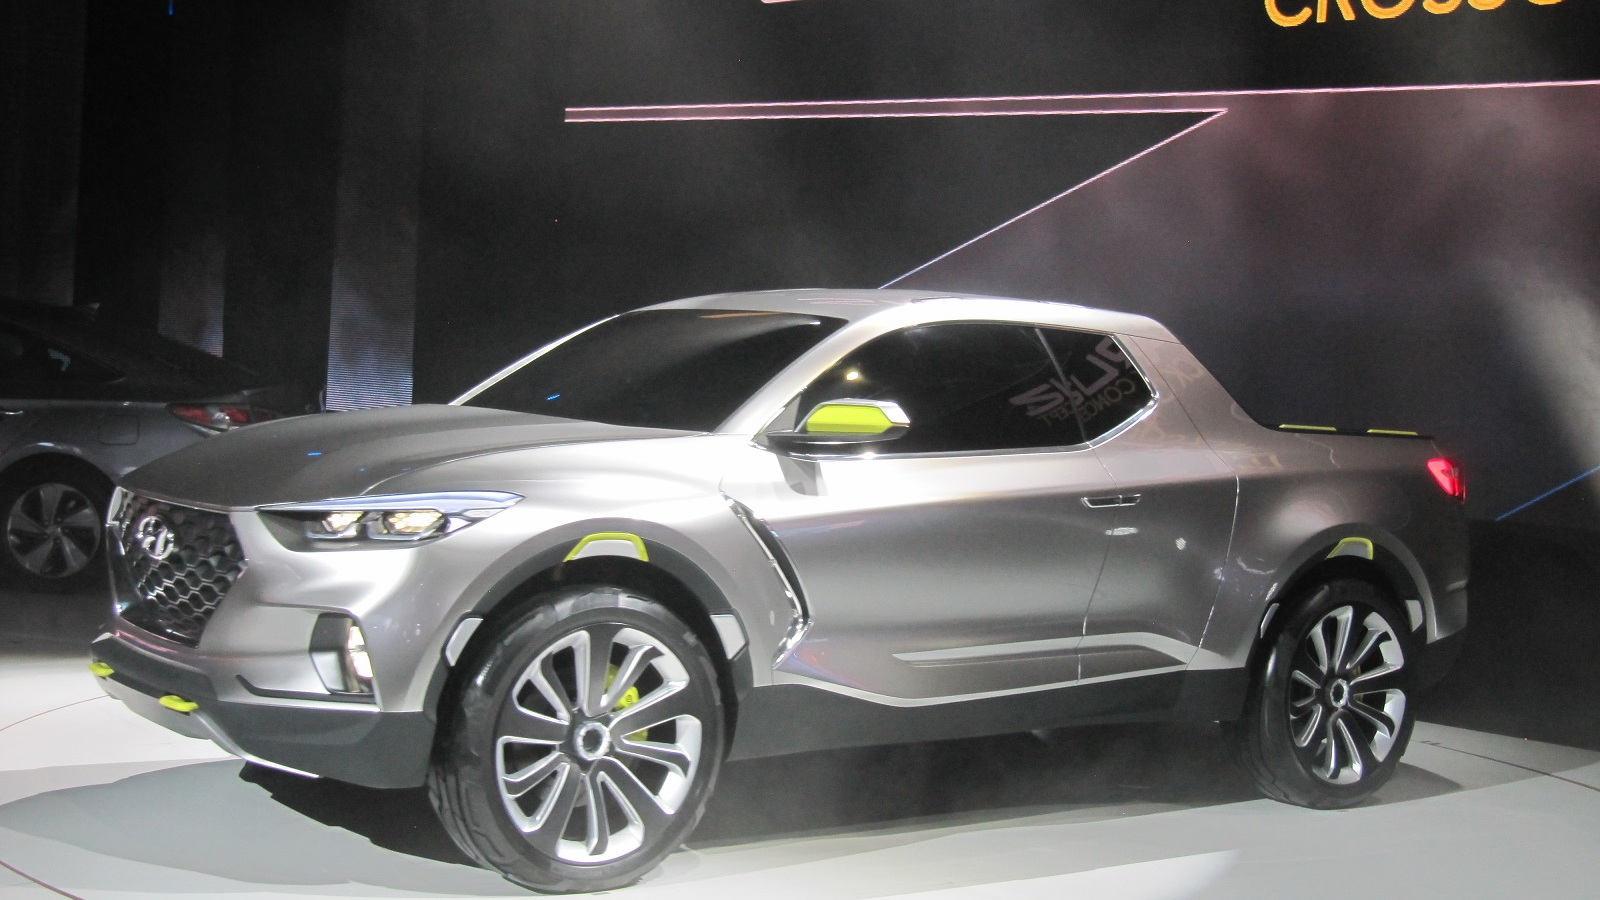 Hyundai Santa Cruz Crossover Truck Concept, 2015 Detroit Auto Show